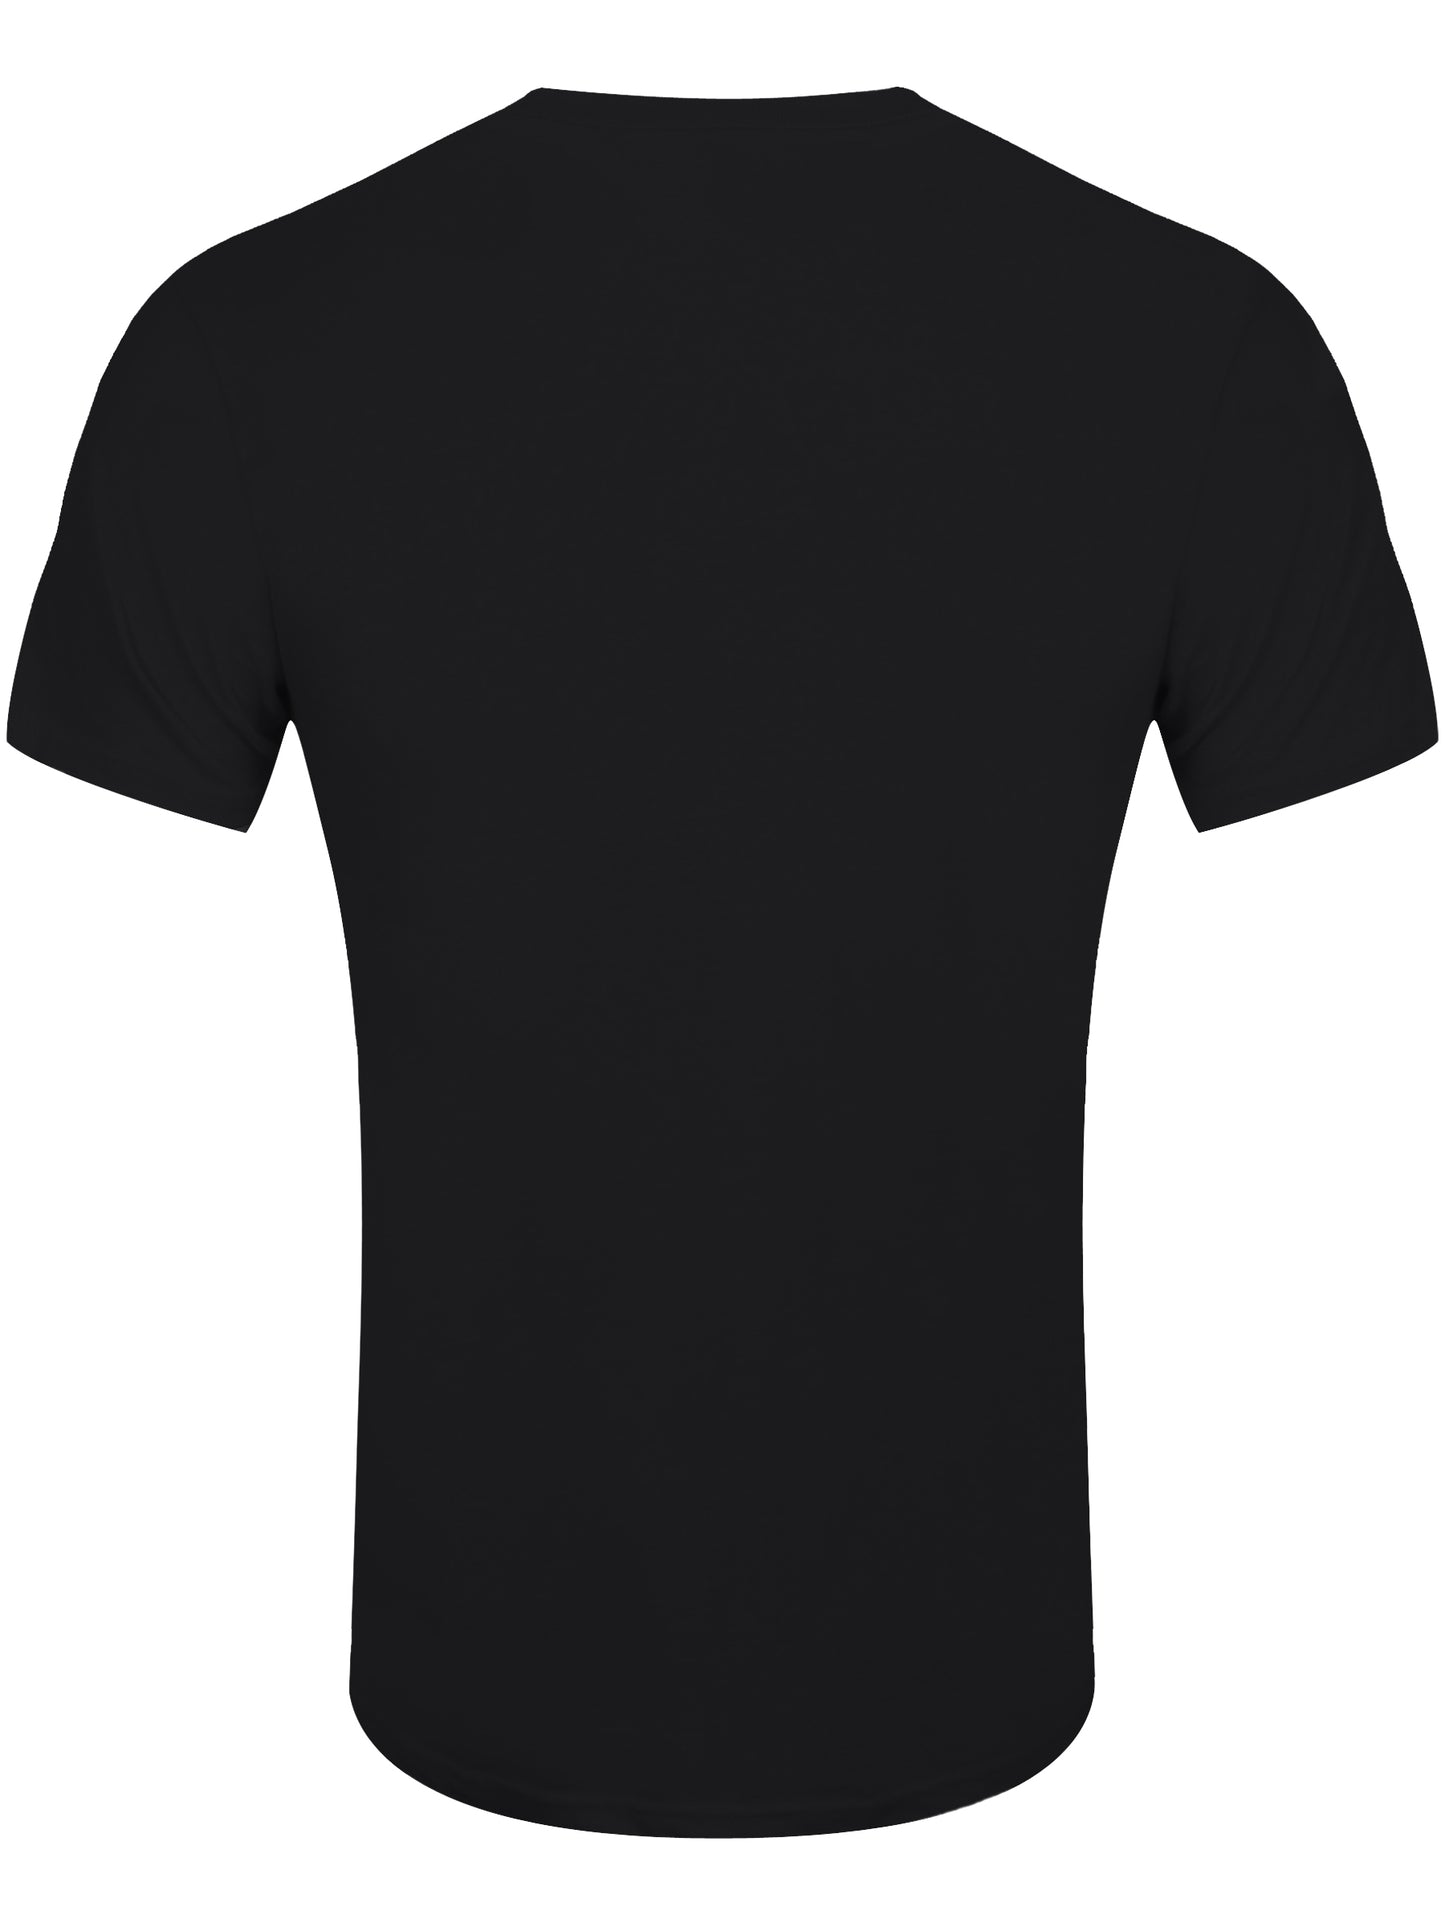 Slayer Classic Logo Men's Black T-Shirt